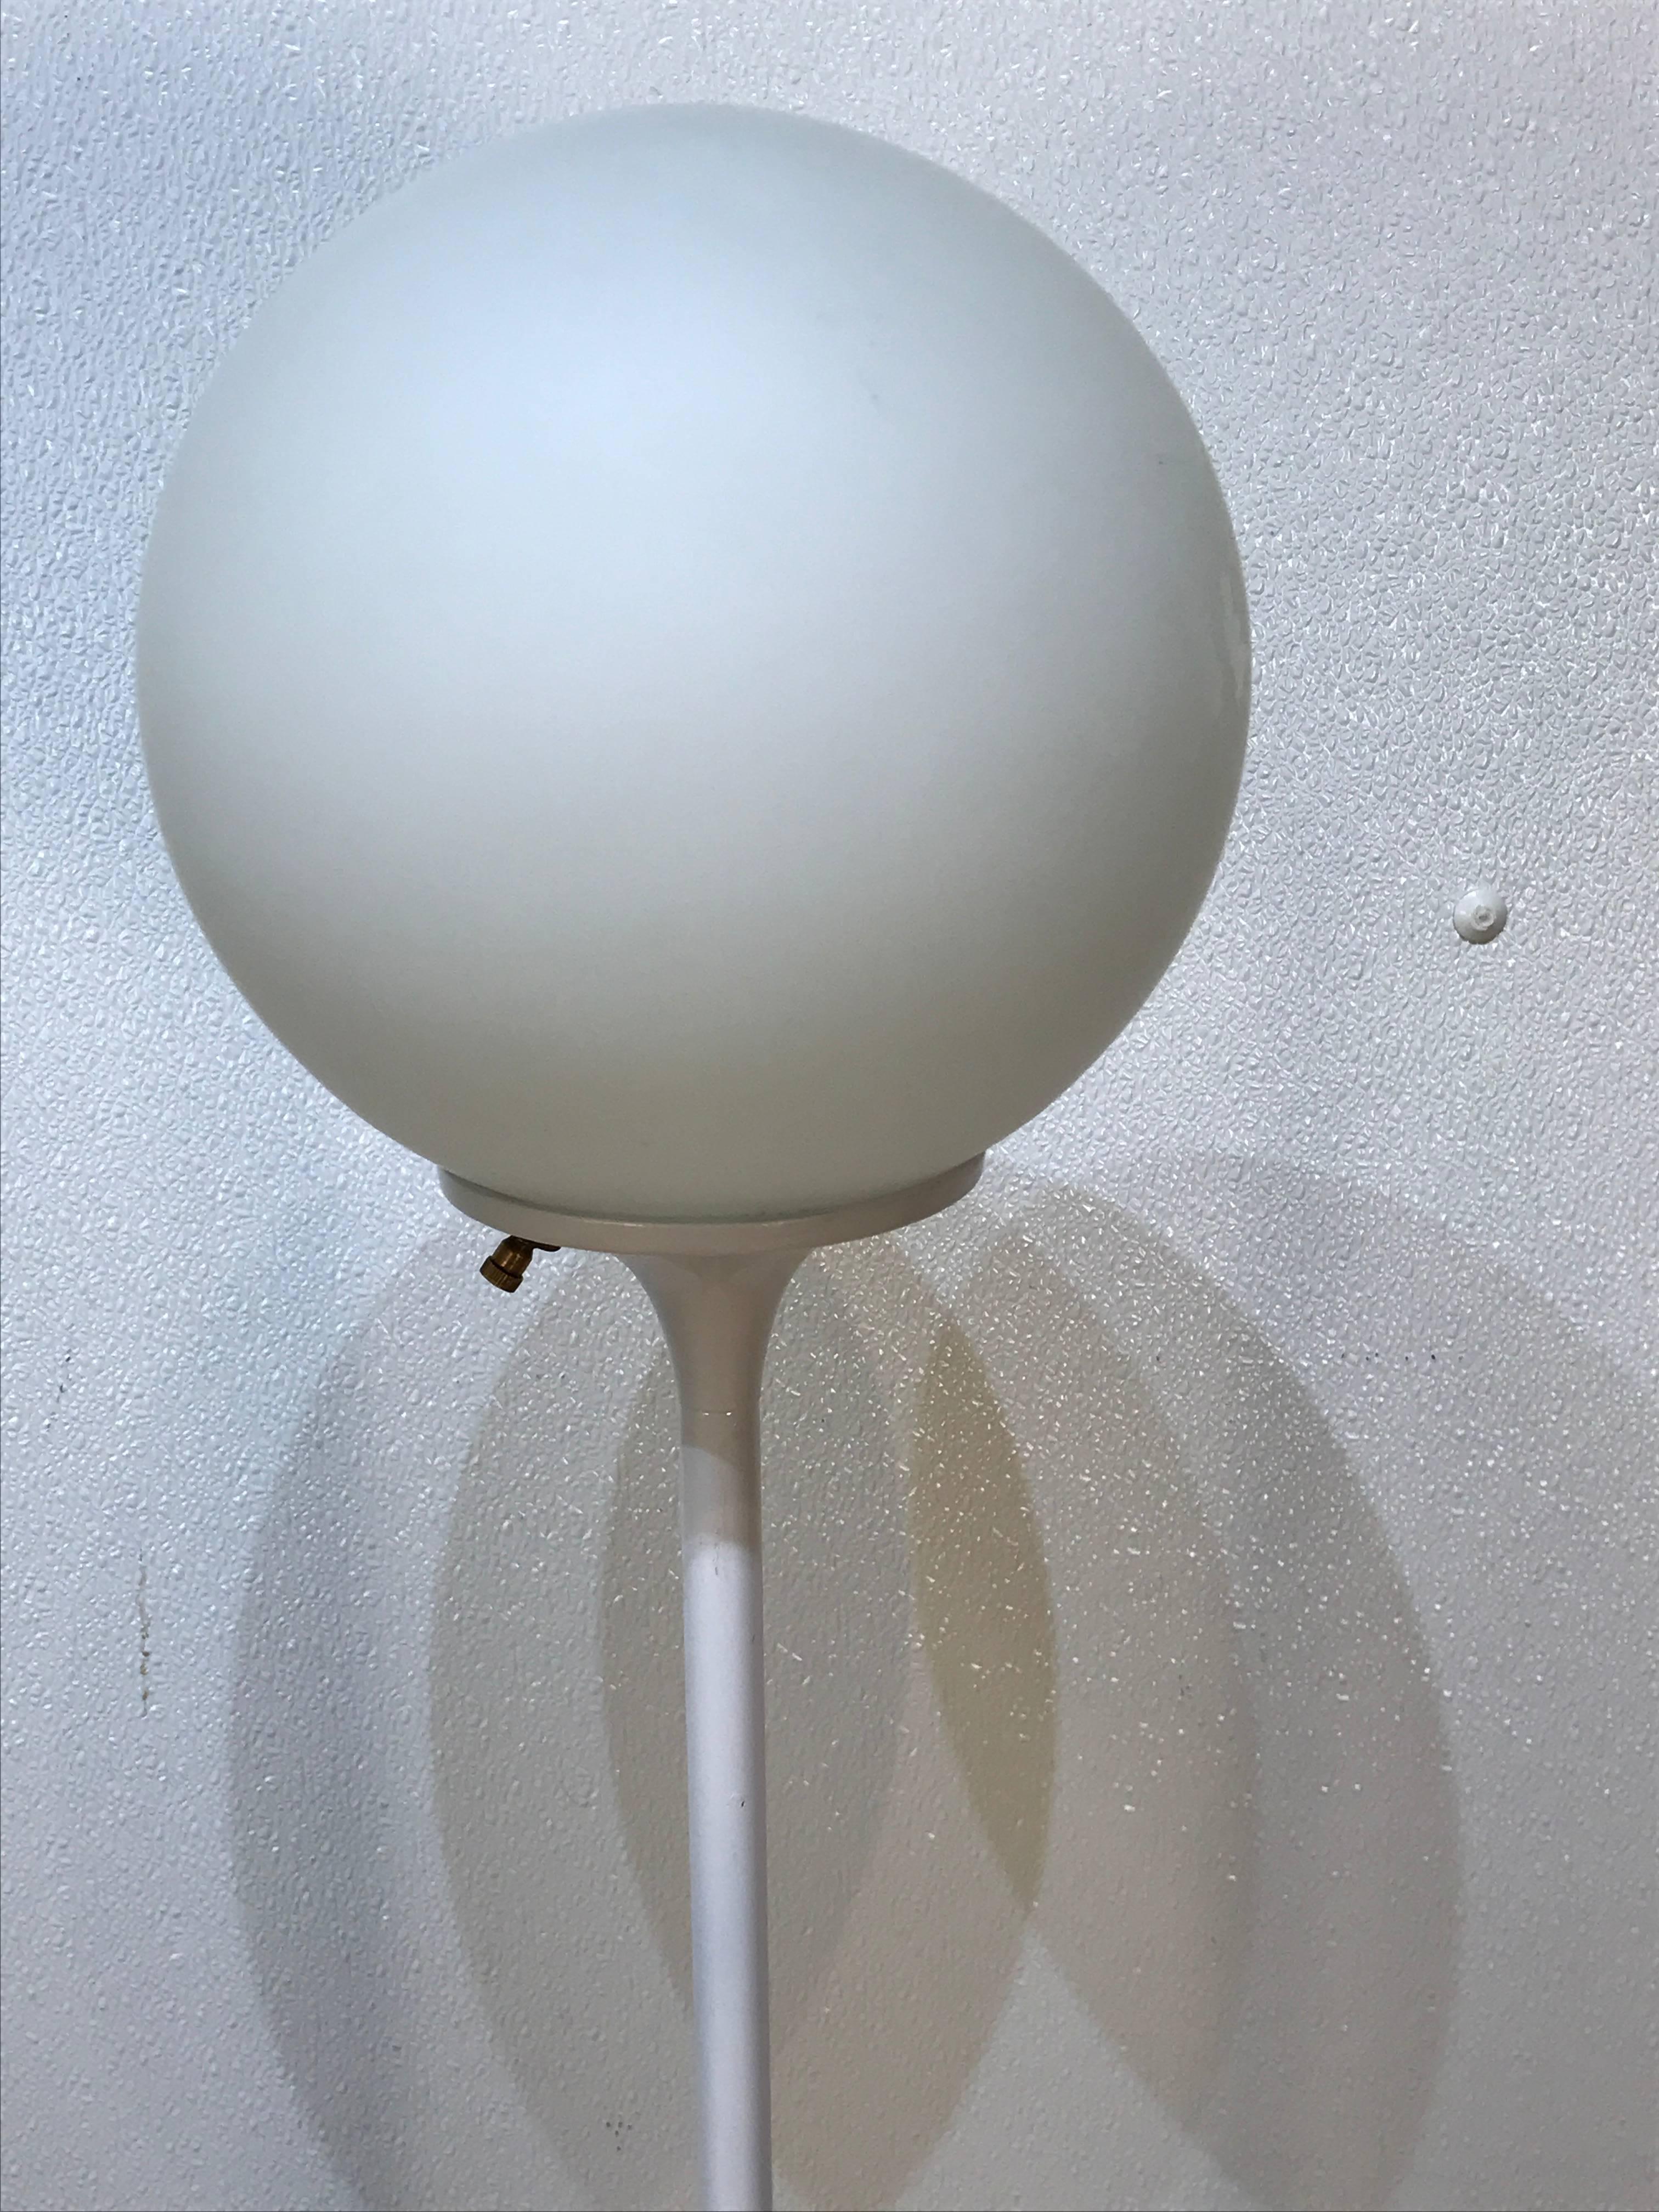 Saarinen style floor lamp with white ball shade.